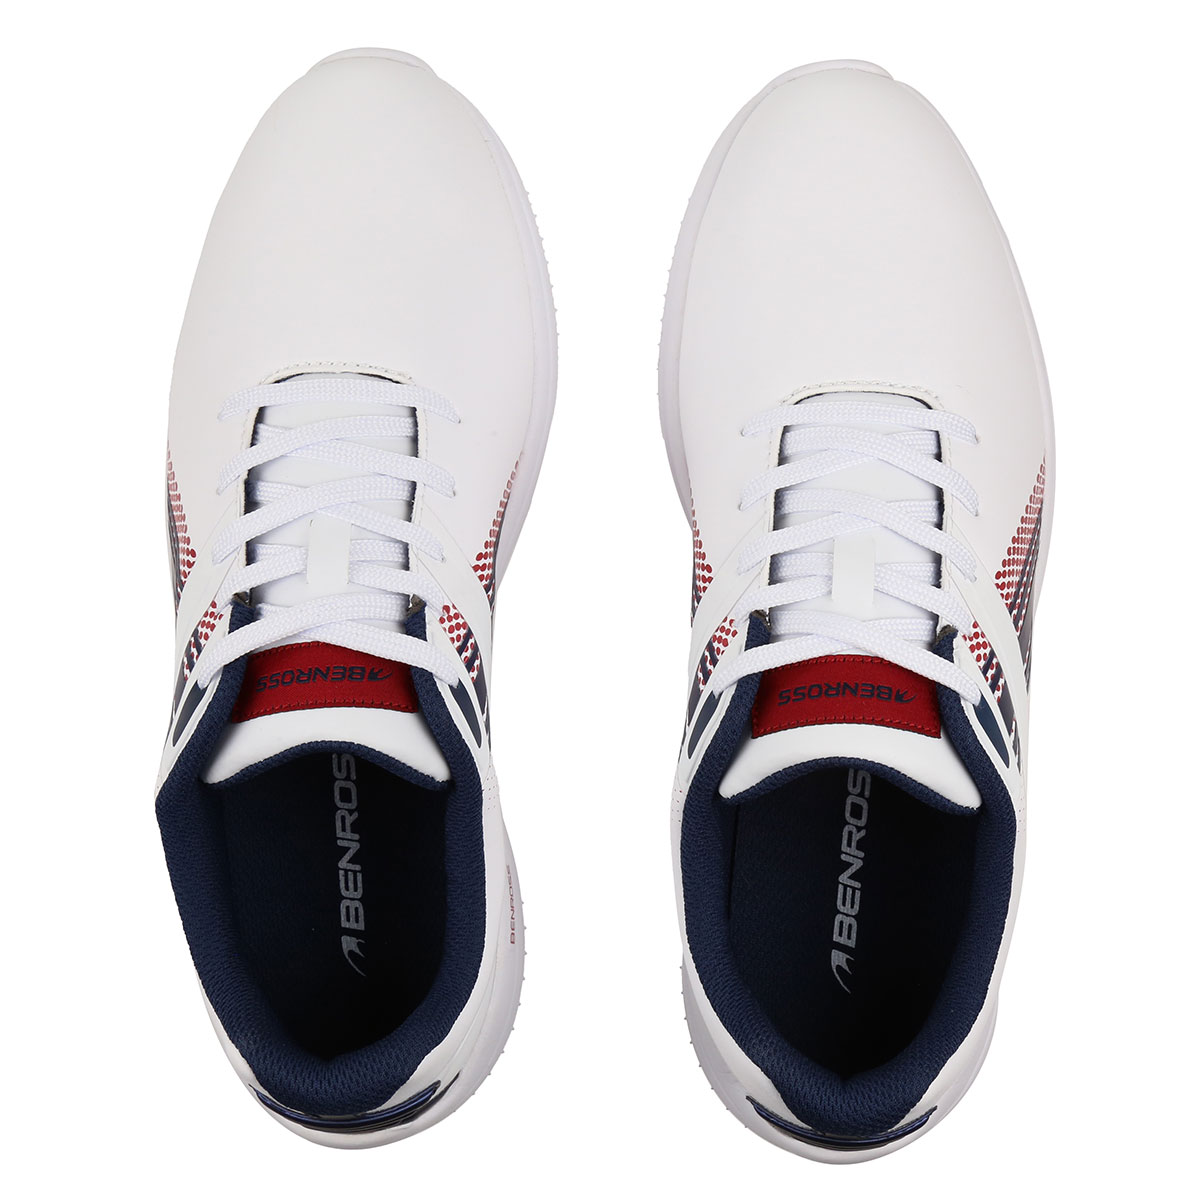 Benross Men's Dynamo Waterproof Spikeless Golf Shoes from american golf